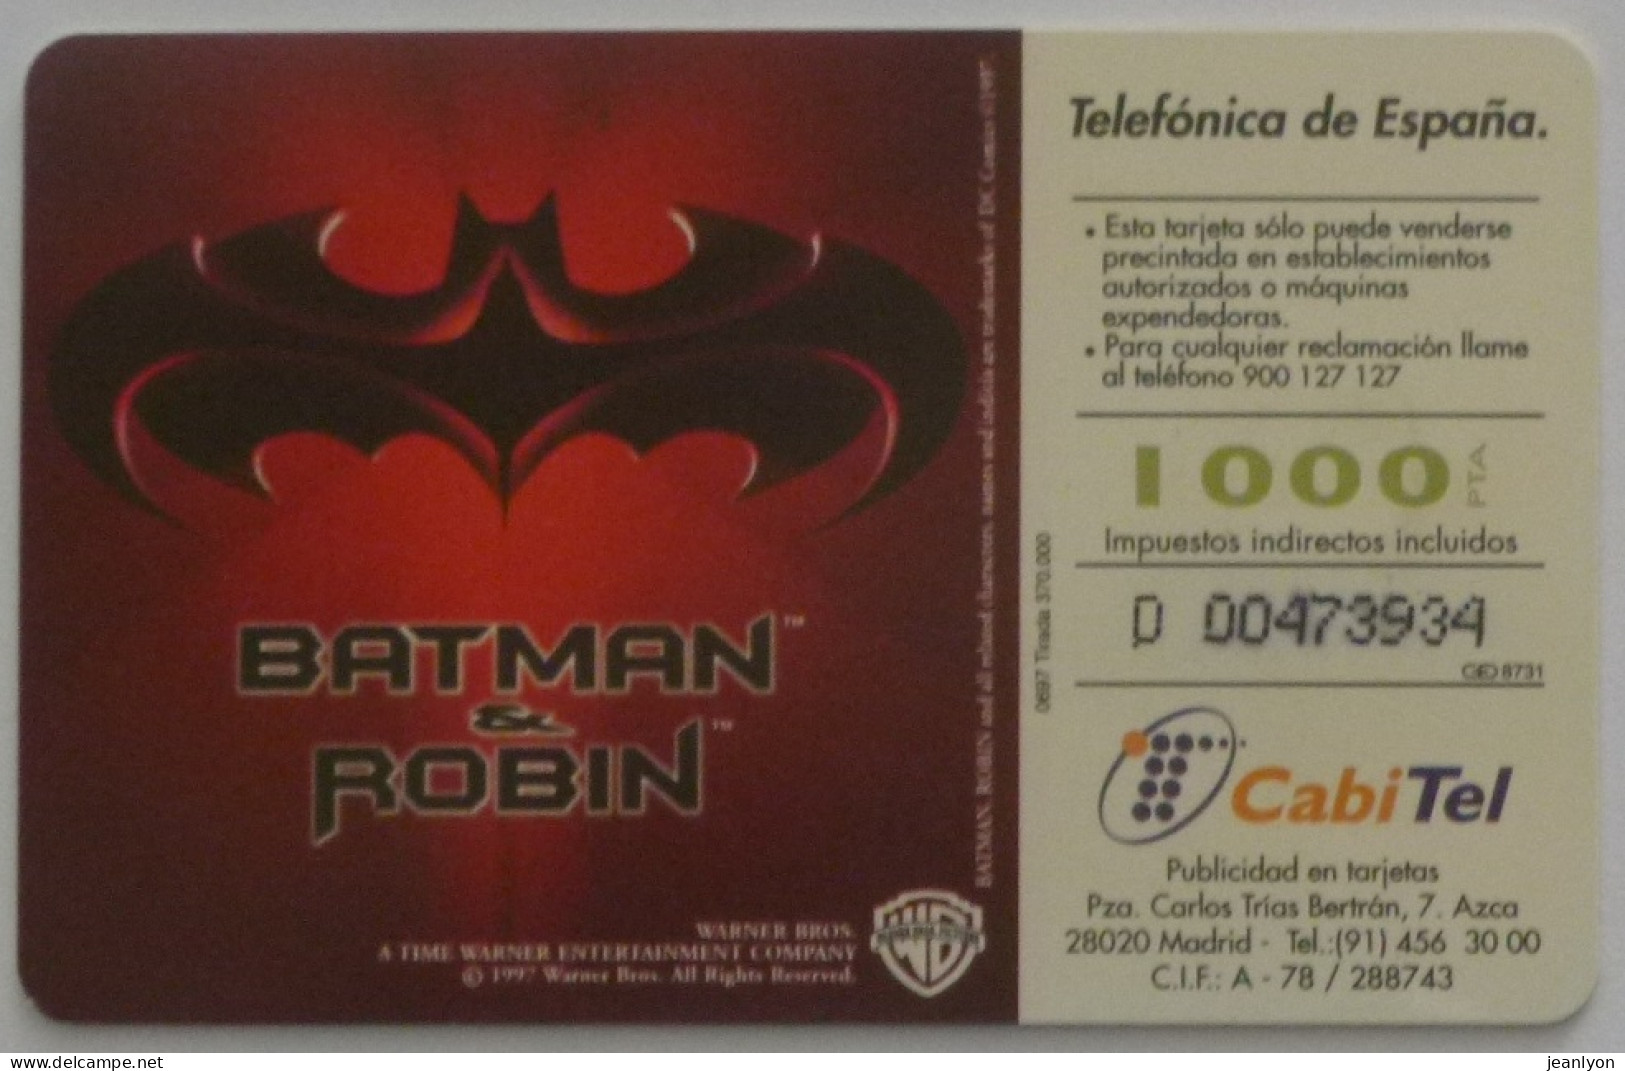 CINEMA - BATMAN ET ROBIN - Film Warner Bros - Carte Téléphone Espagne 1000 Utilisée - Kino